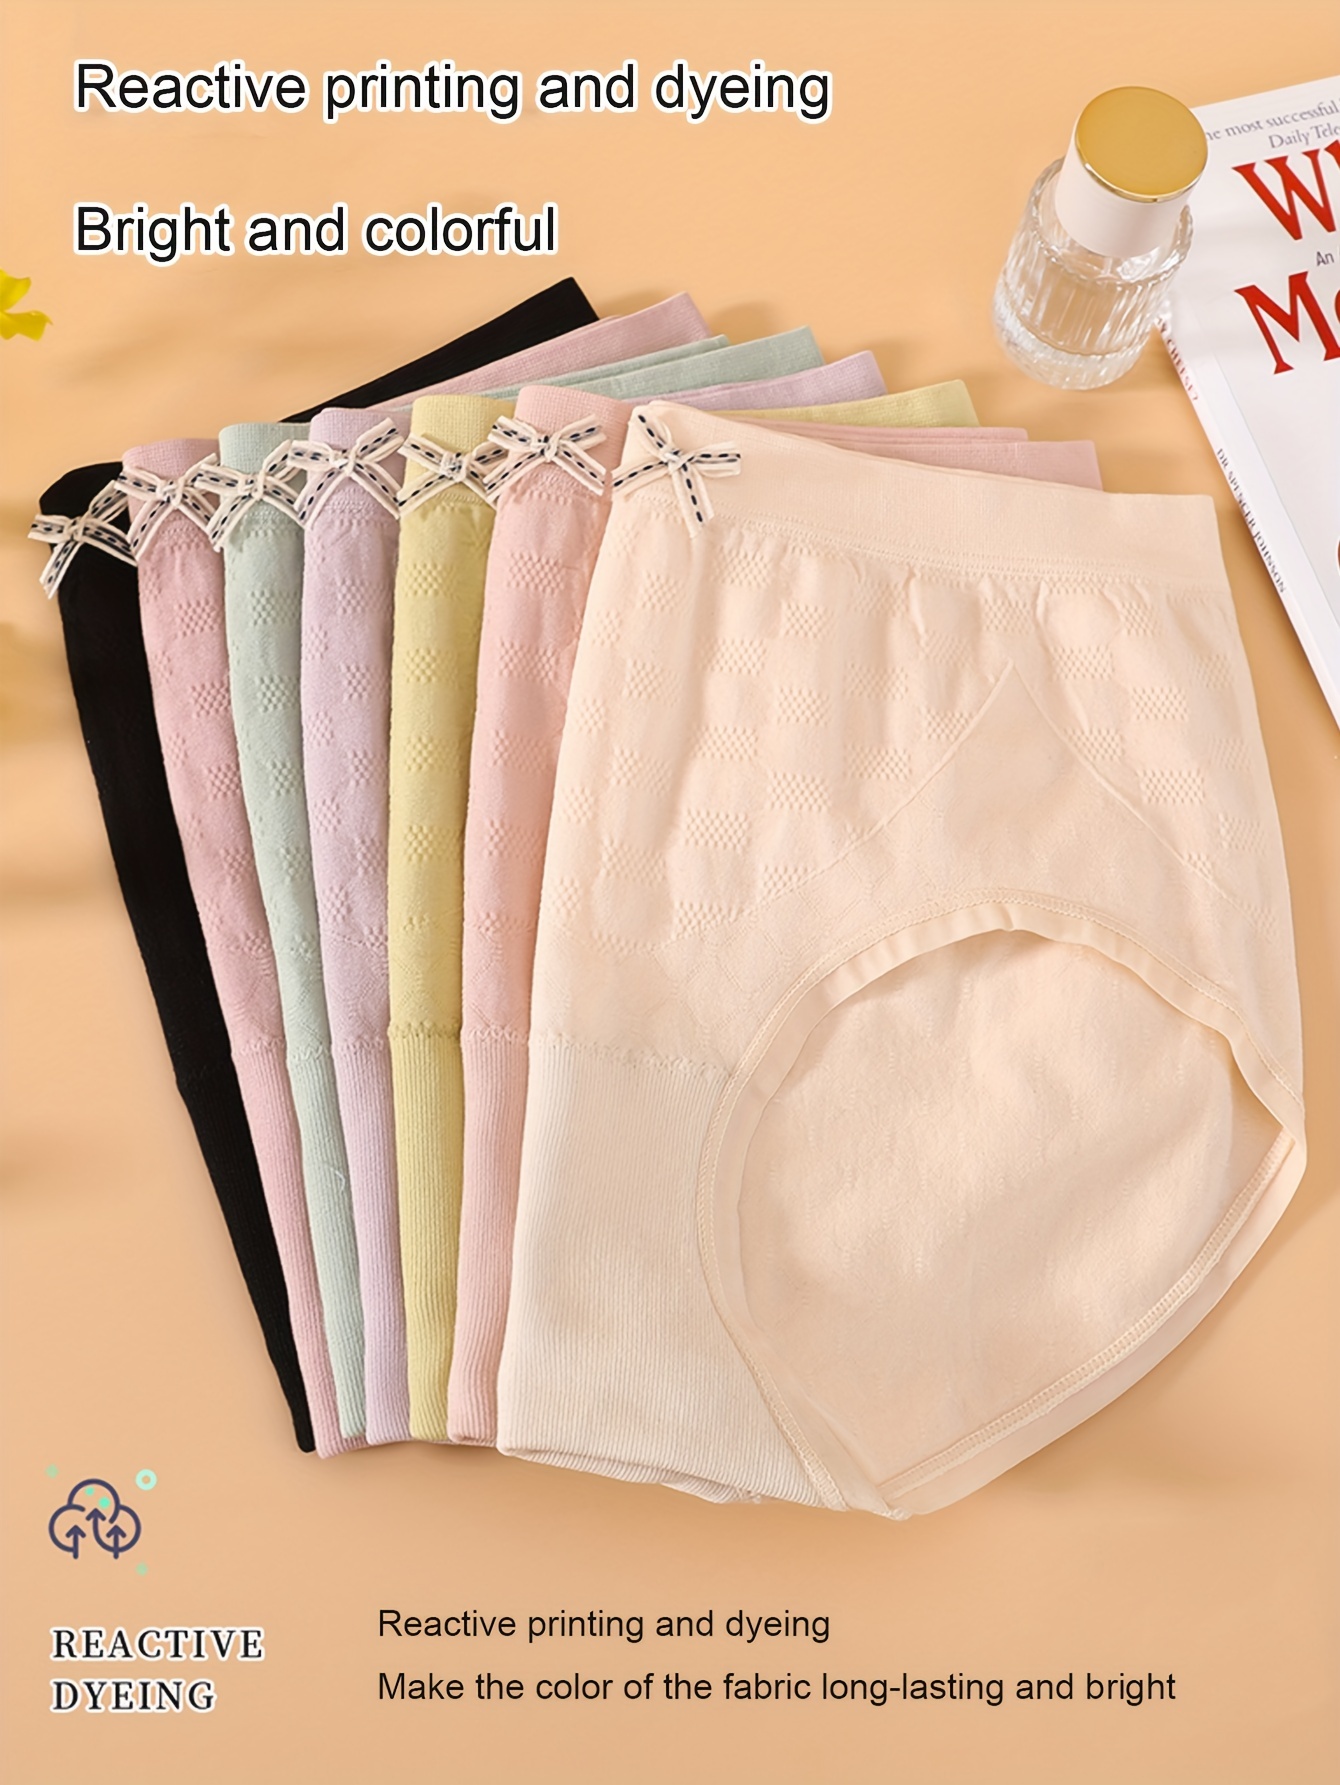 3pcs Cotton Maternity Panties Low Waist Briefs for Pregnant Women Pregnancy  Underwear Lingerie Maternity Clothes Underwear - AliExpress